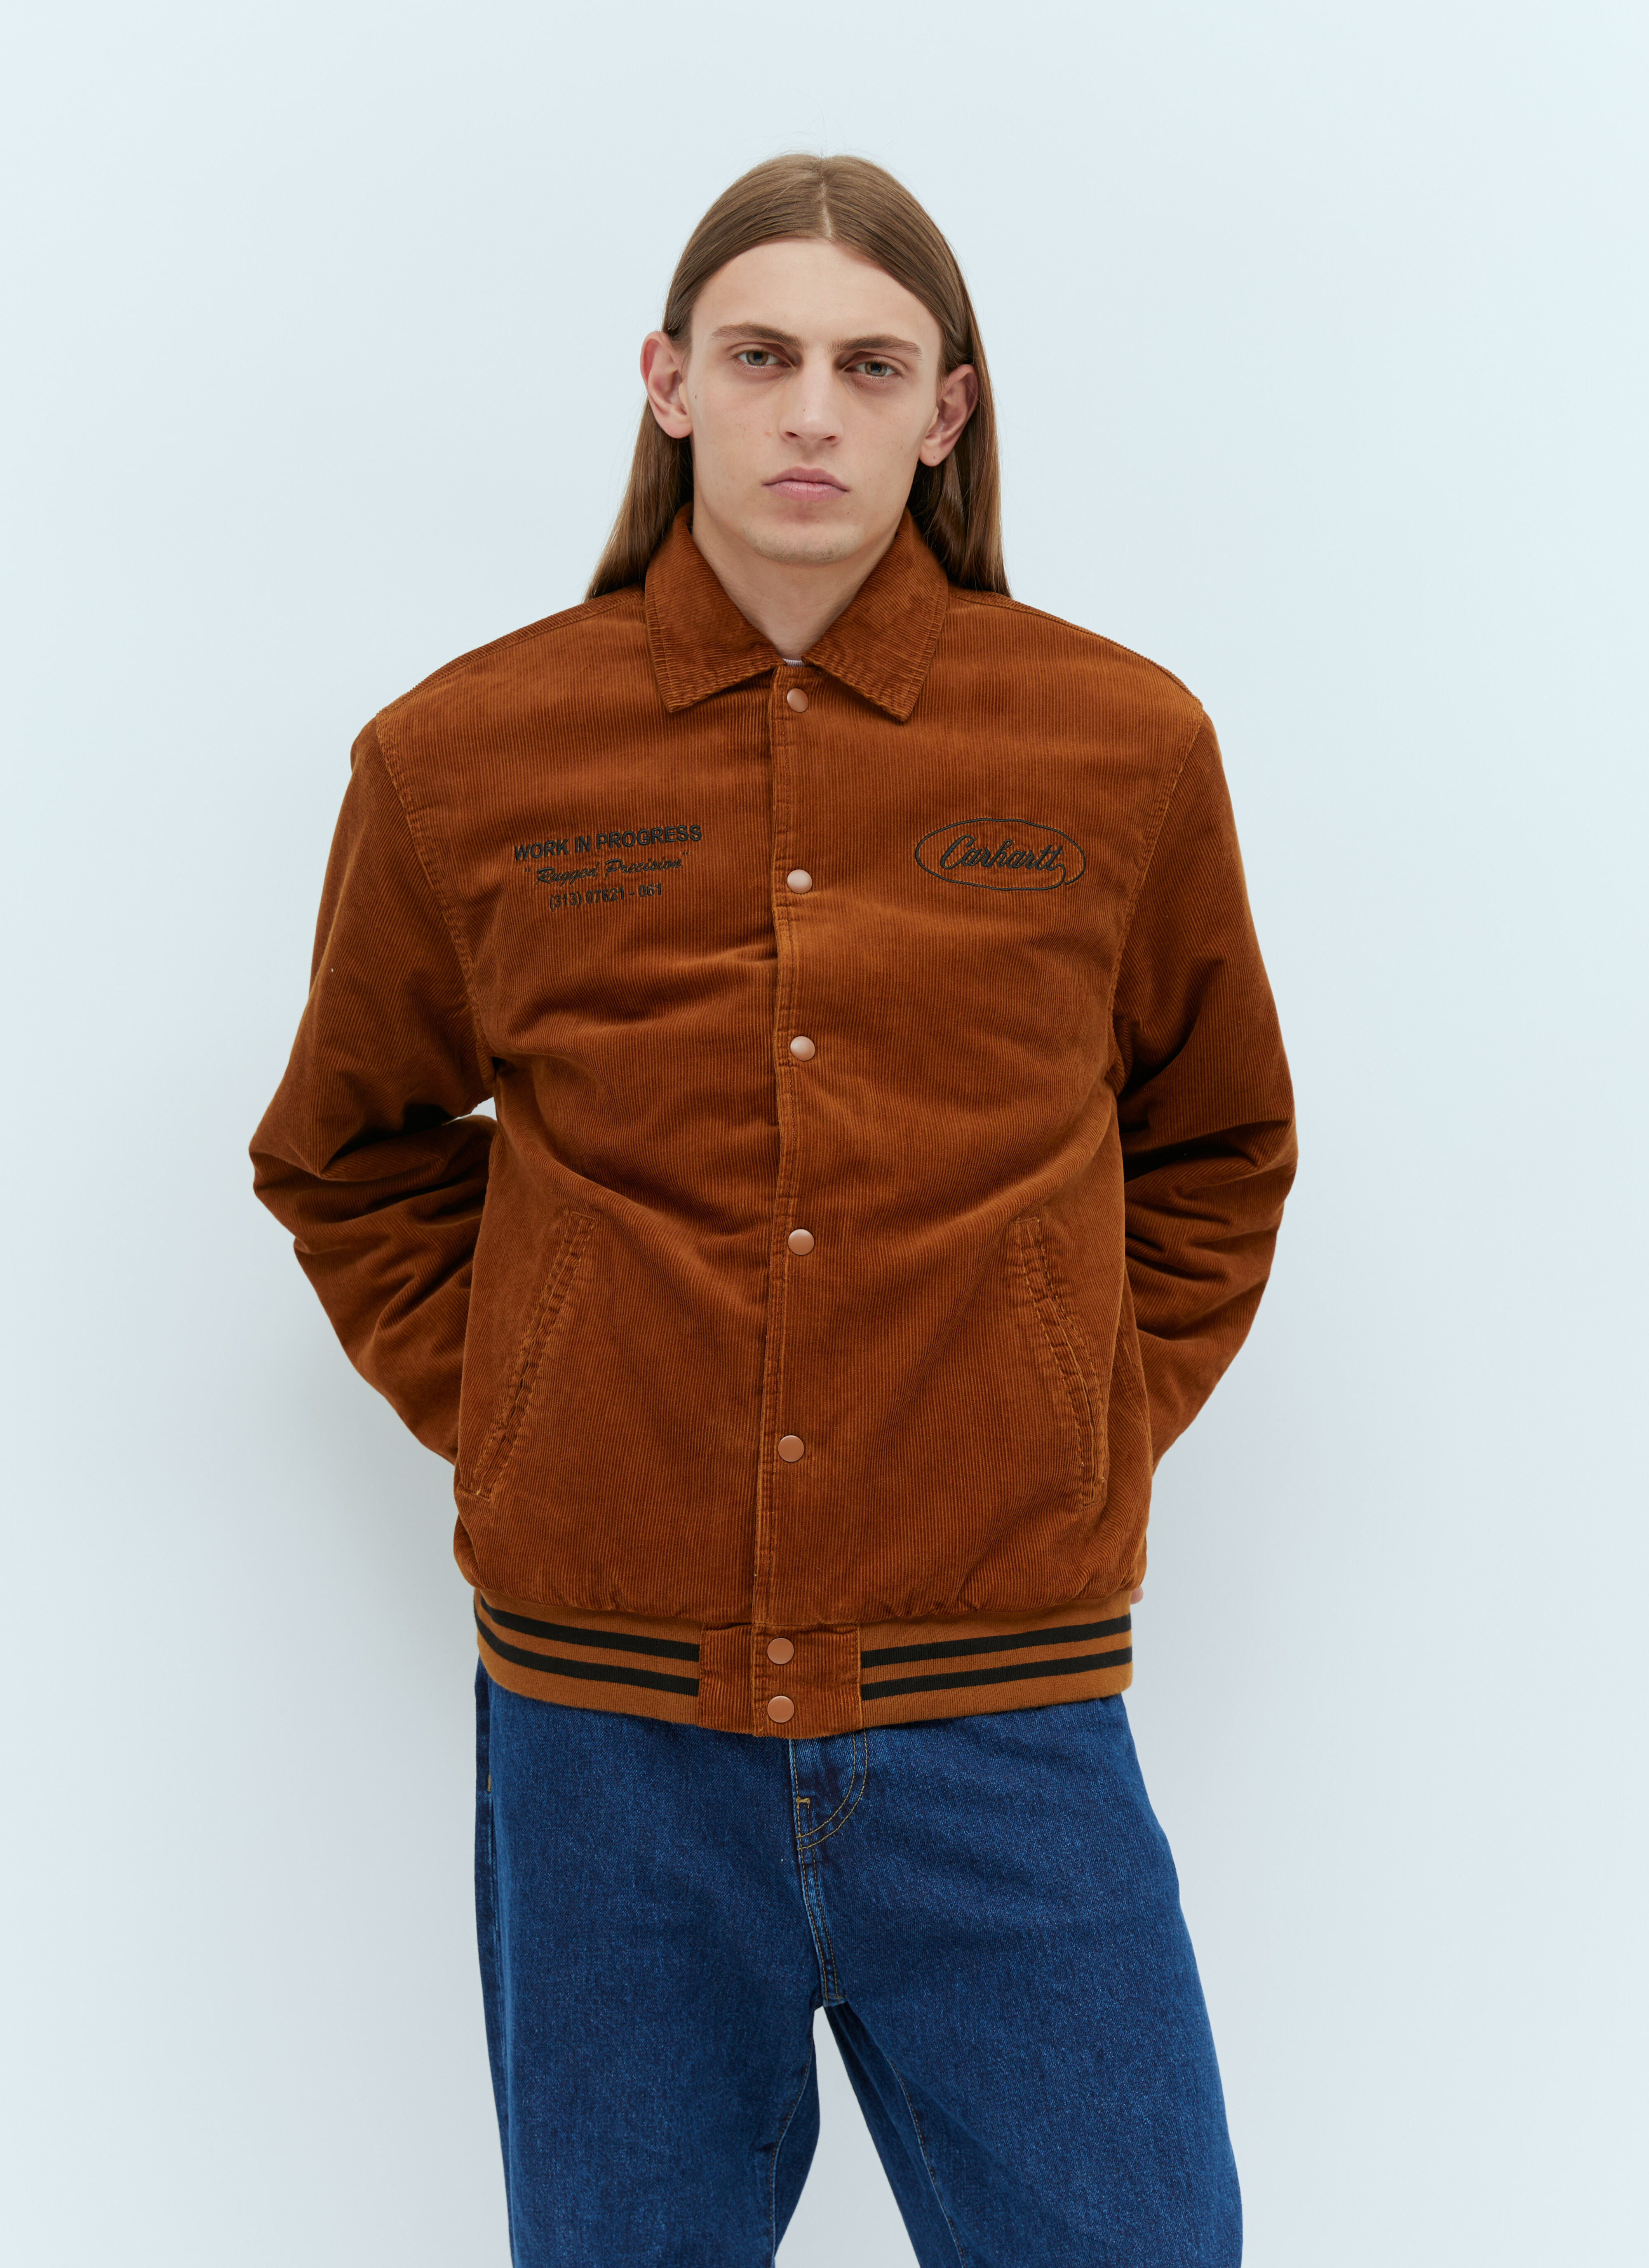 Will Smith Bad Boys Vintage Brown Leather Varsity Jacket